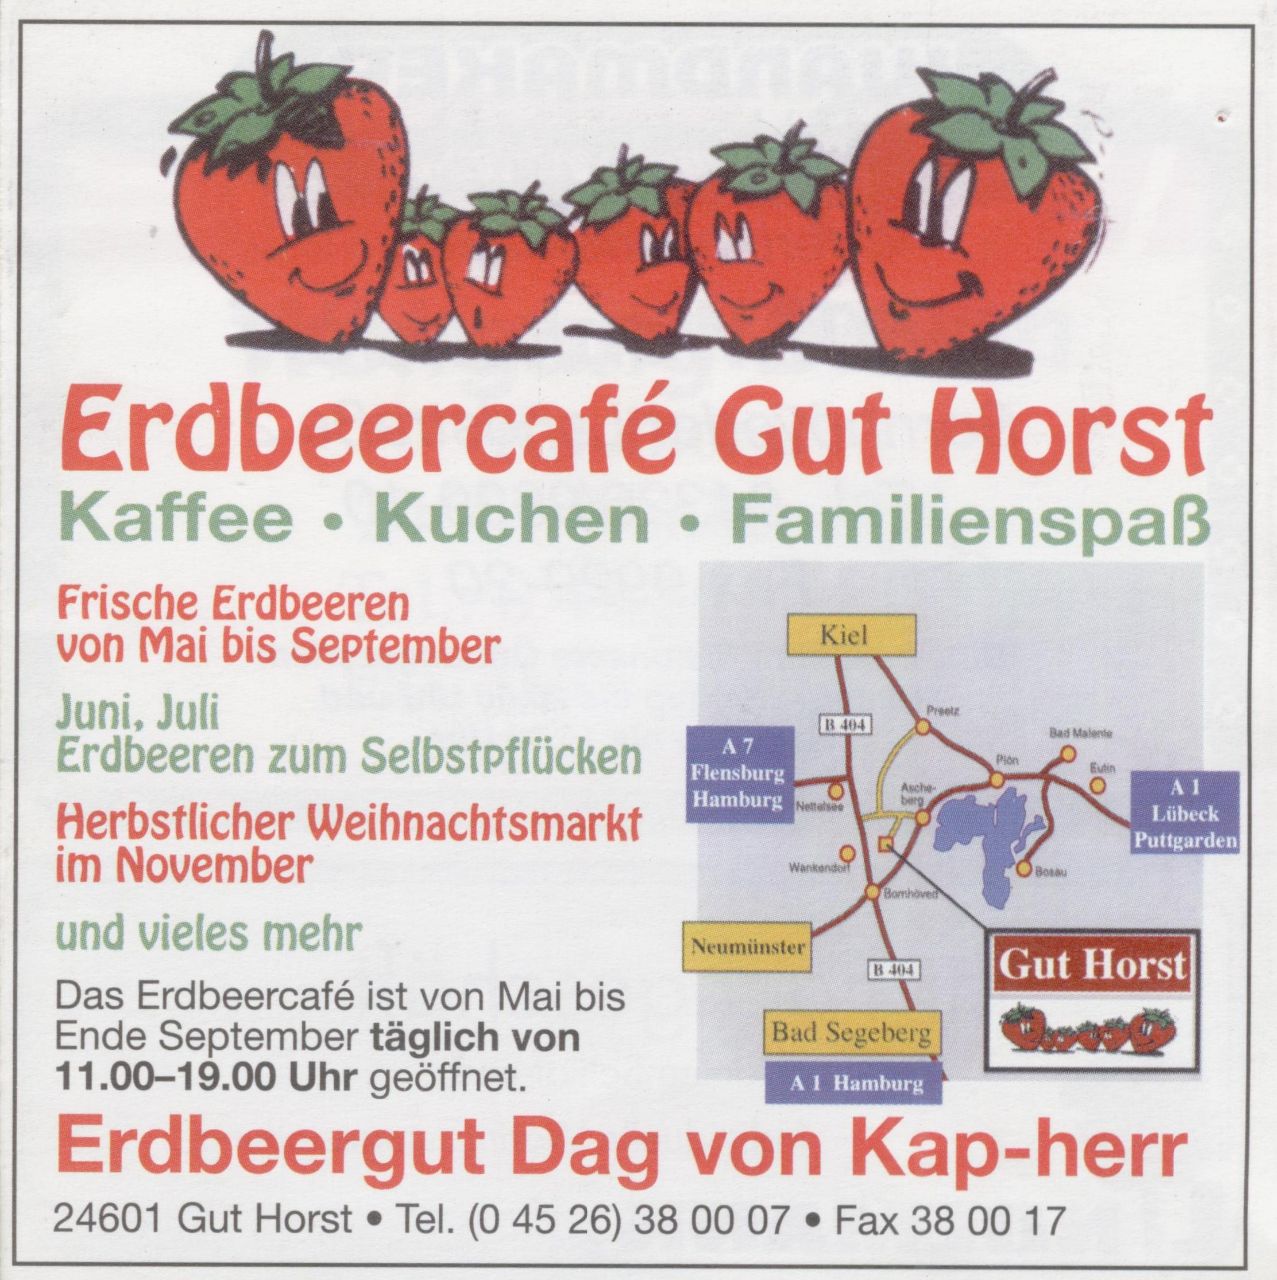 Erdbeercafé Gut Horst